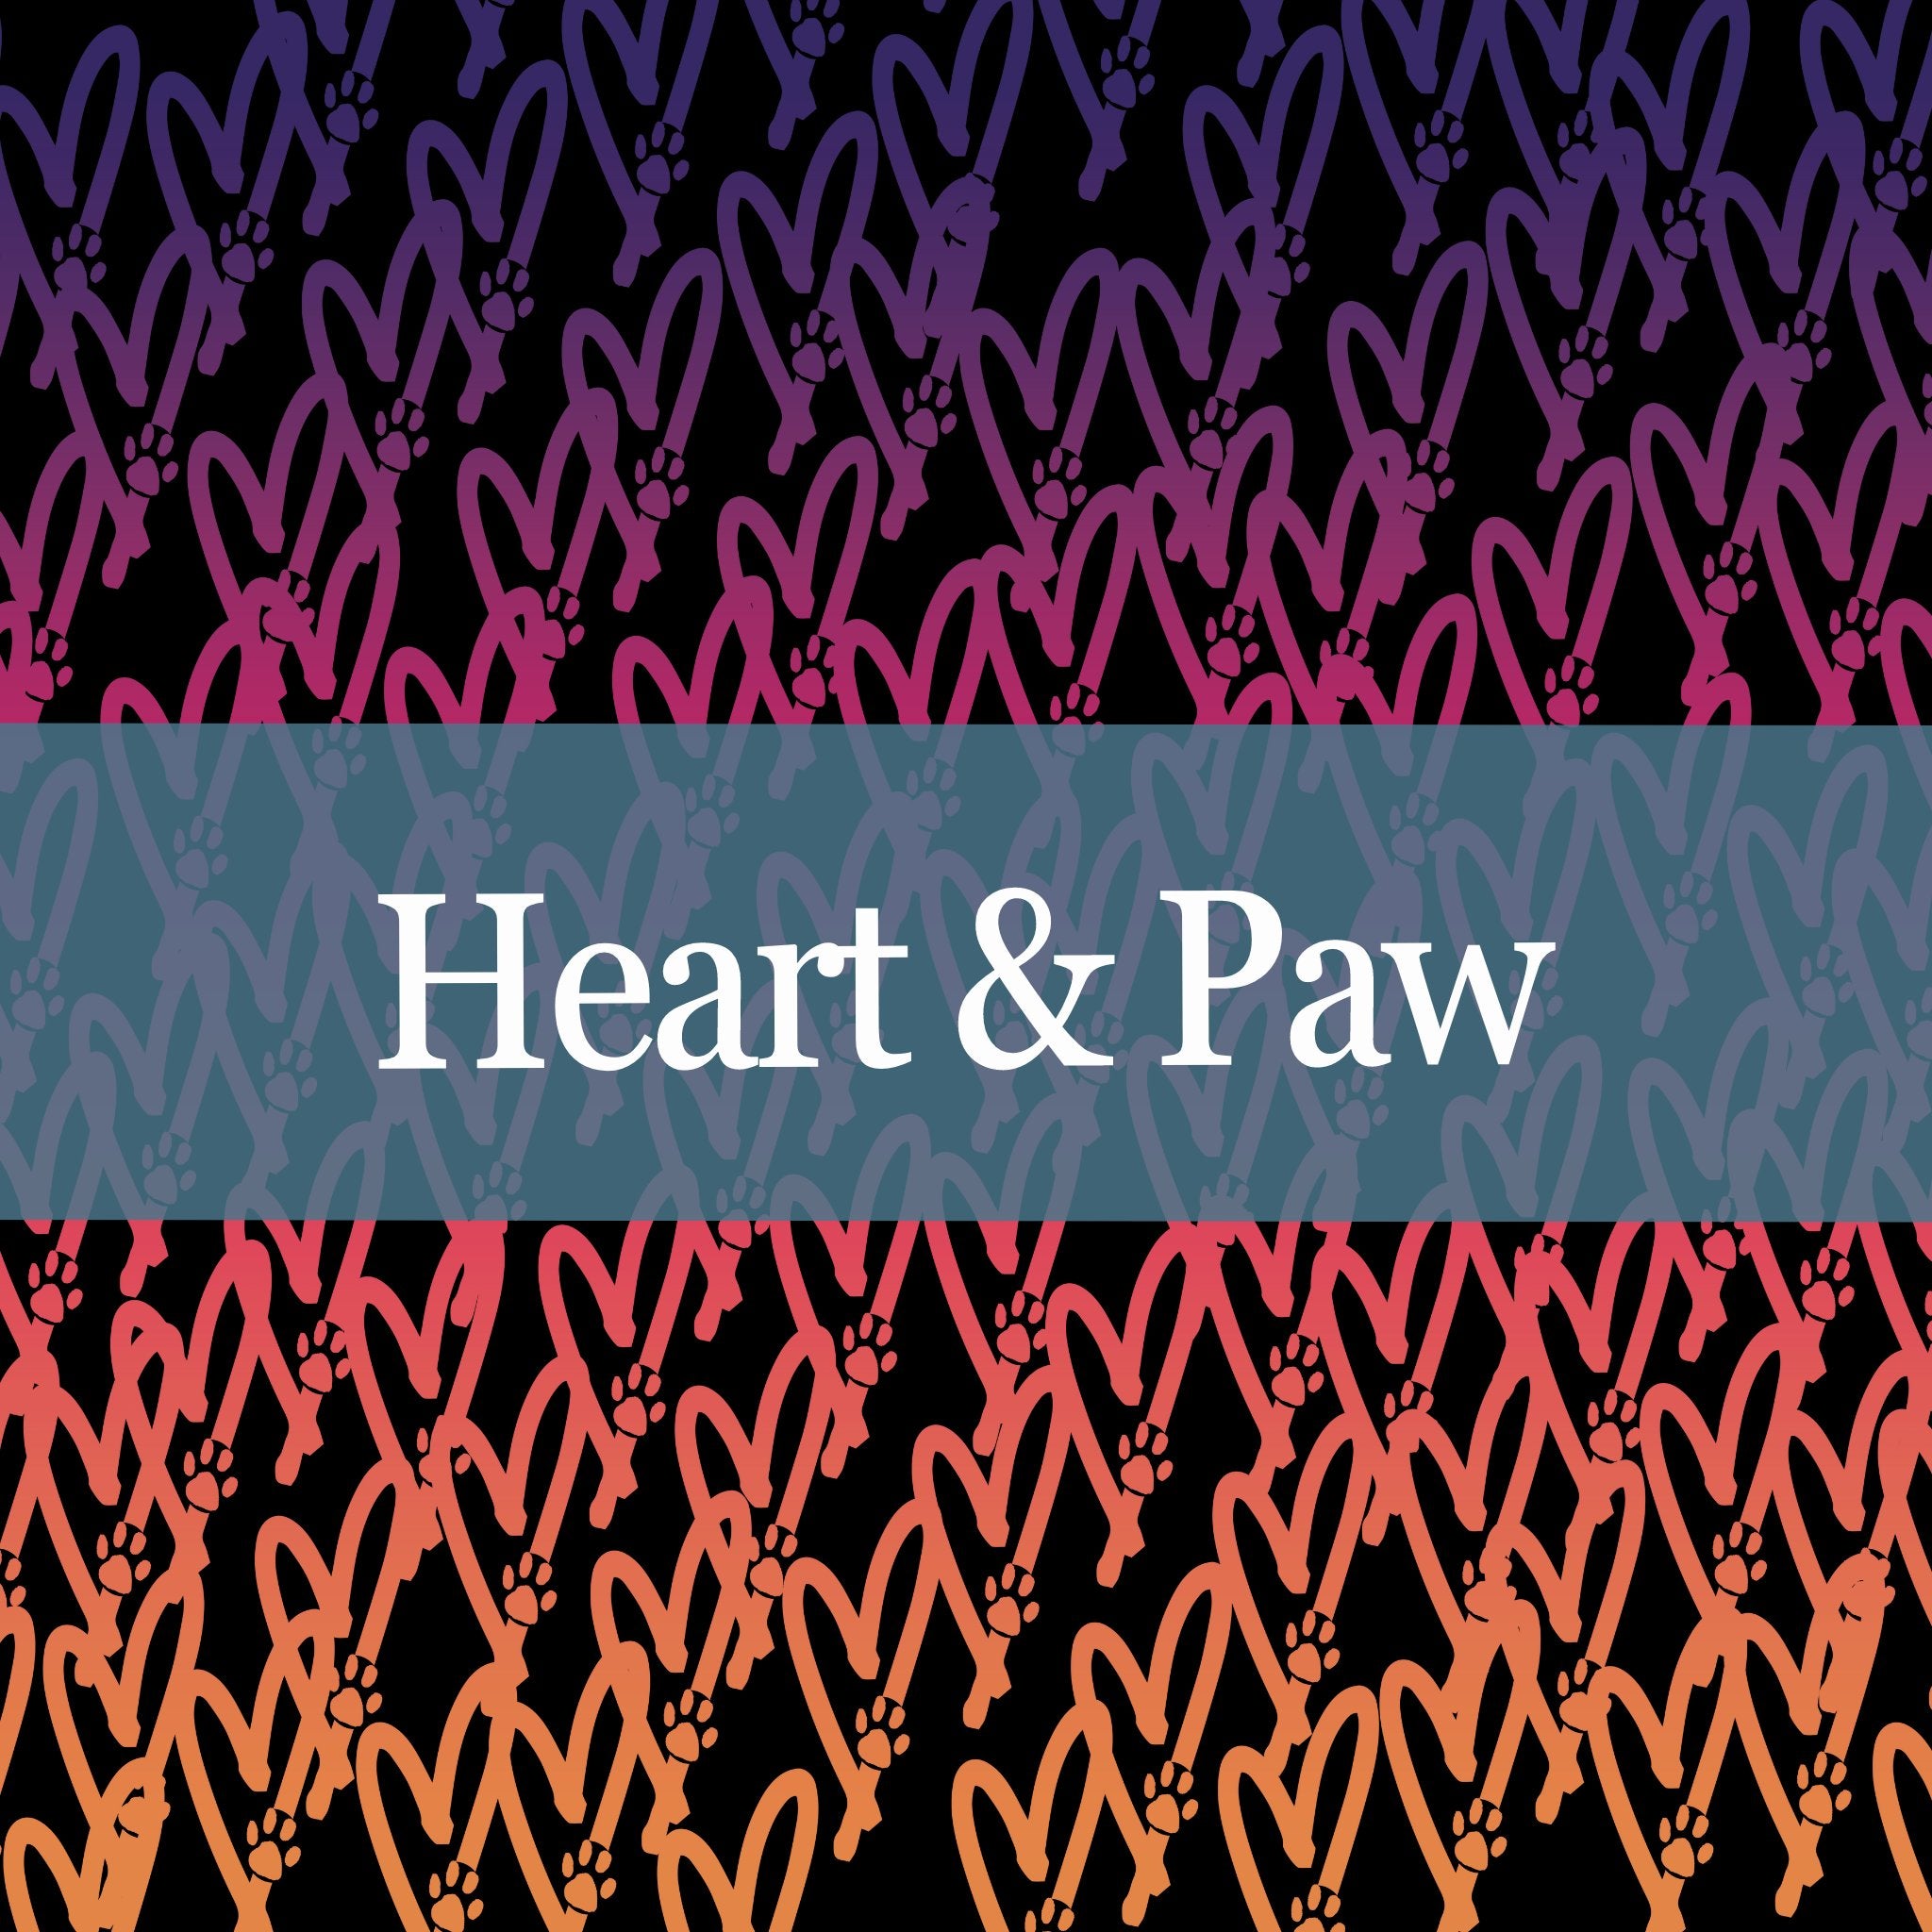 Heart & Paw Print